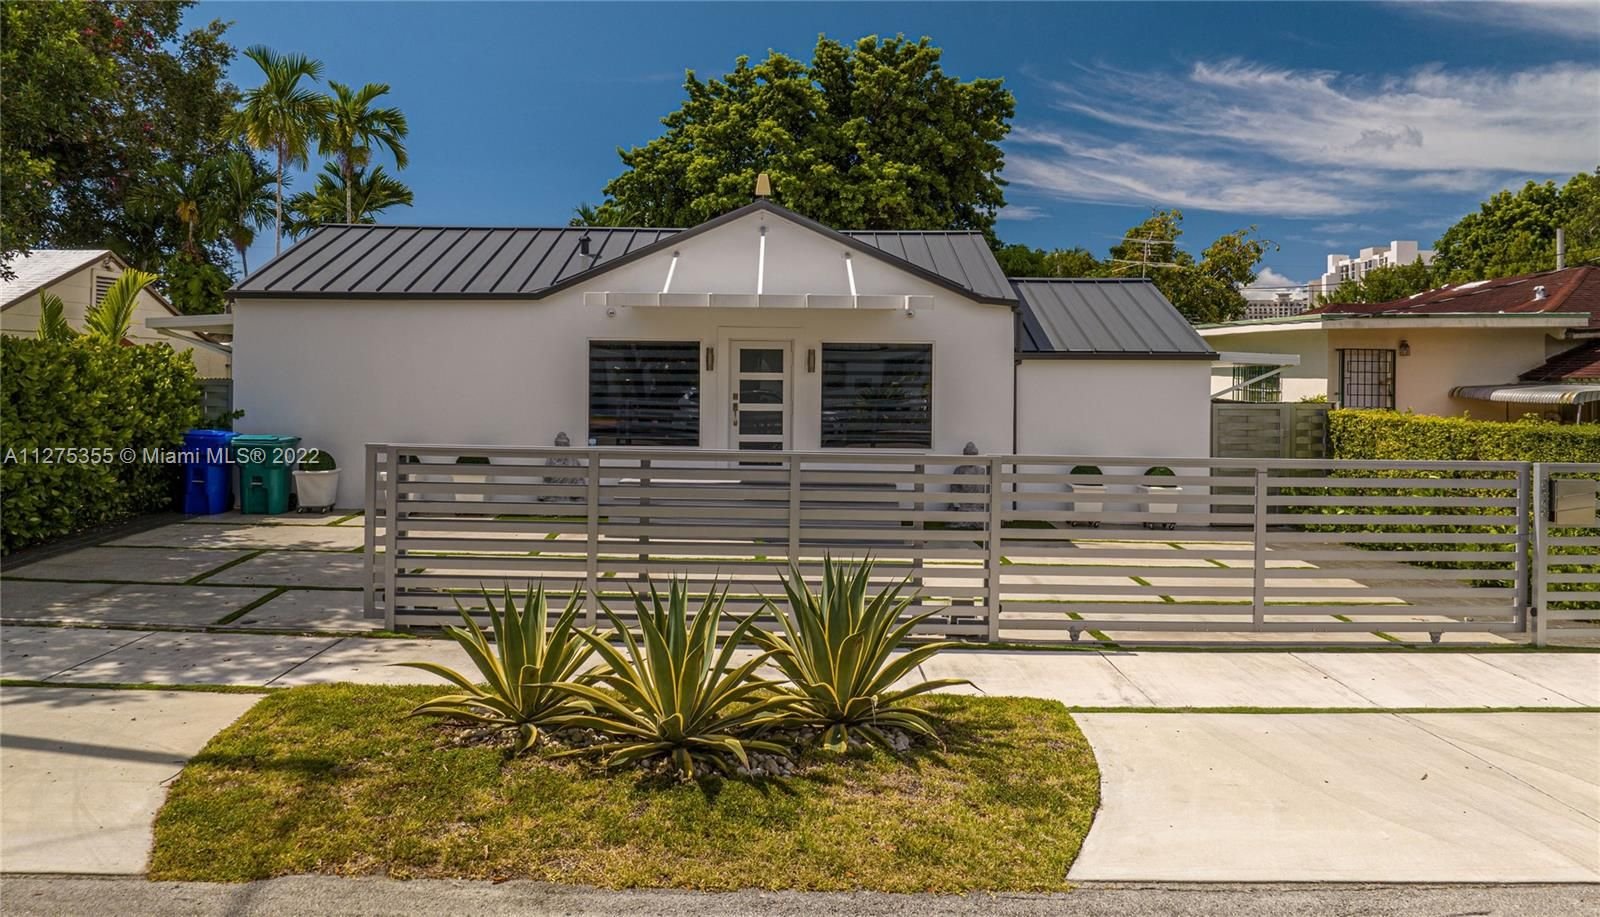 Real estate property located at 3540 12th St, Miami-Dade County, Miami, FL